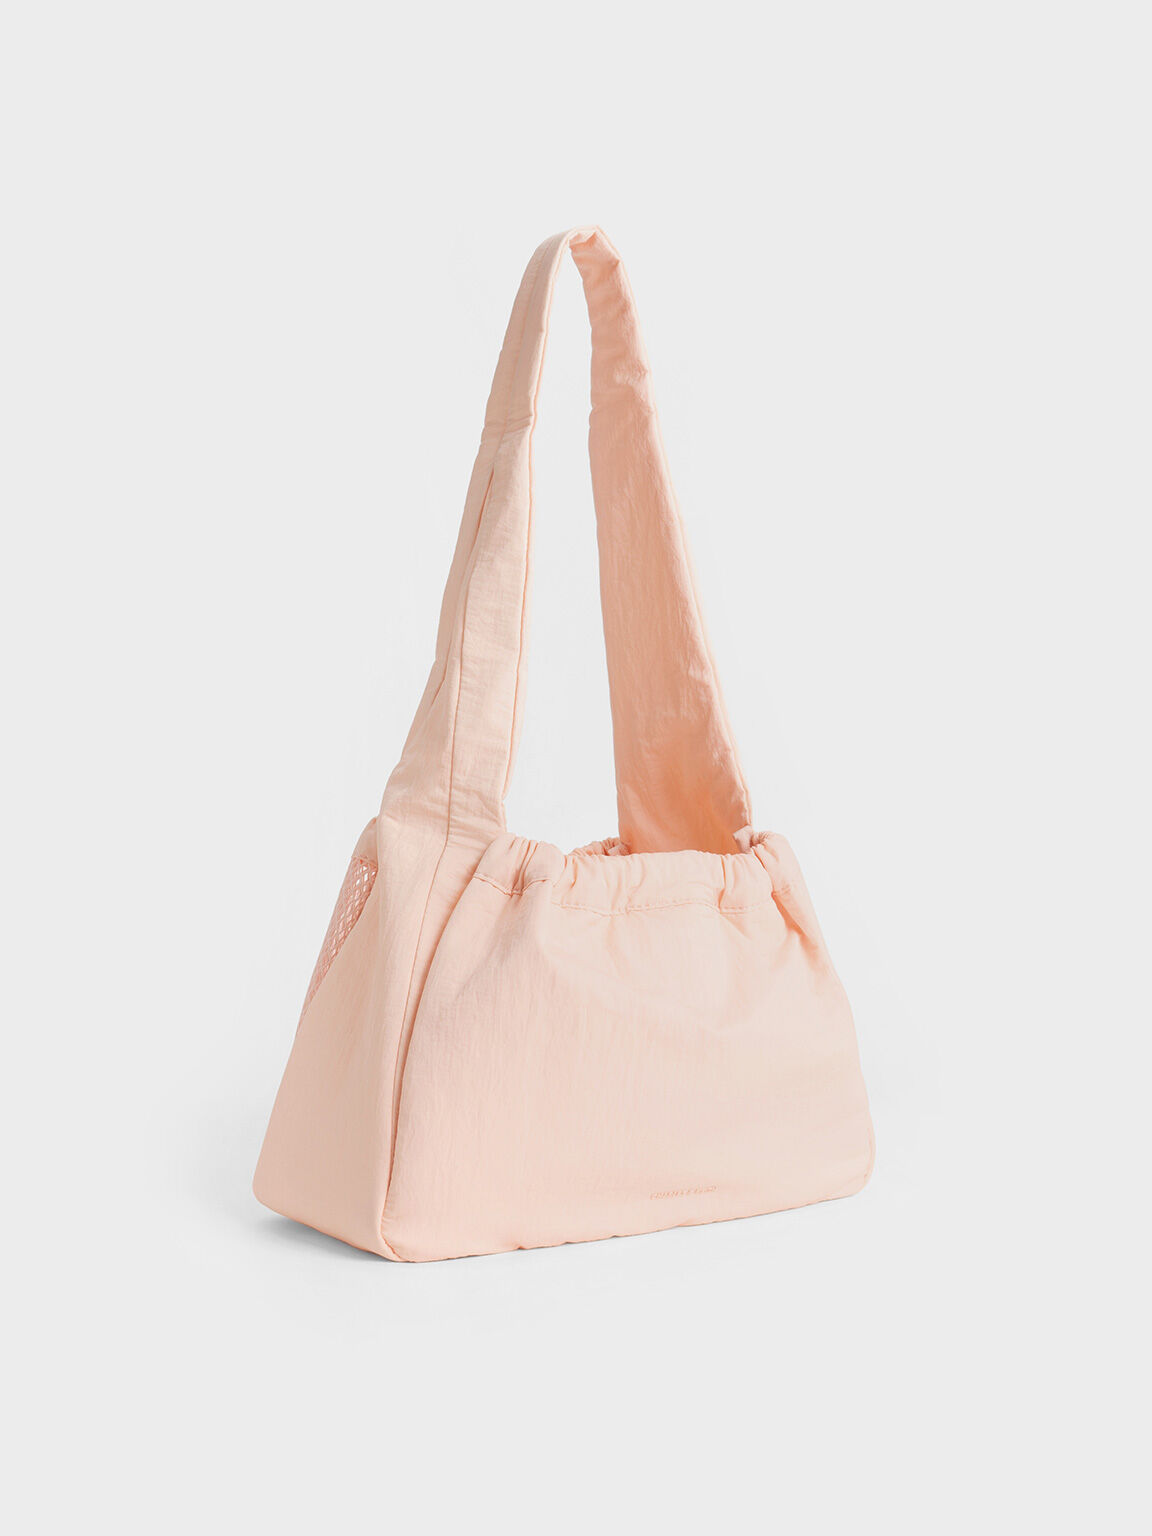 Terra Mesh & Nylon Shoulder Bag, Light Pink, hi-res